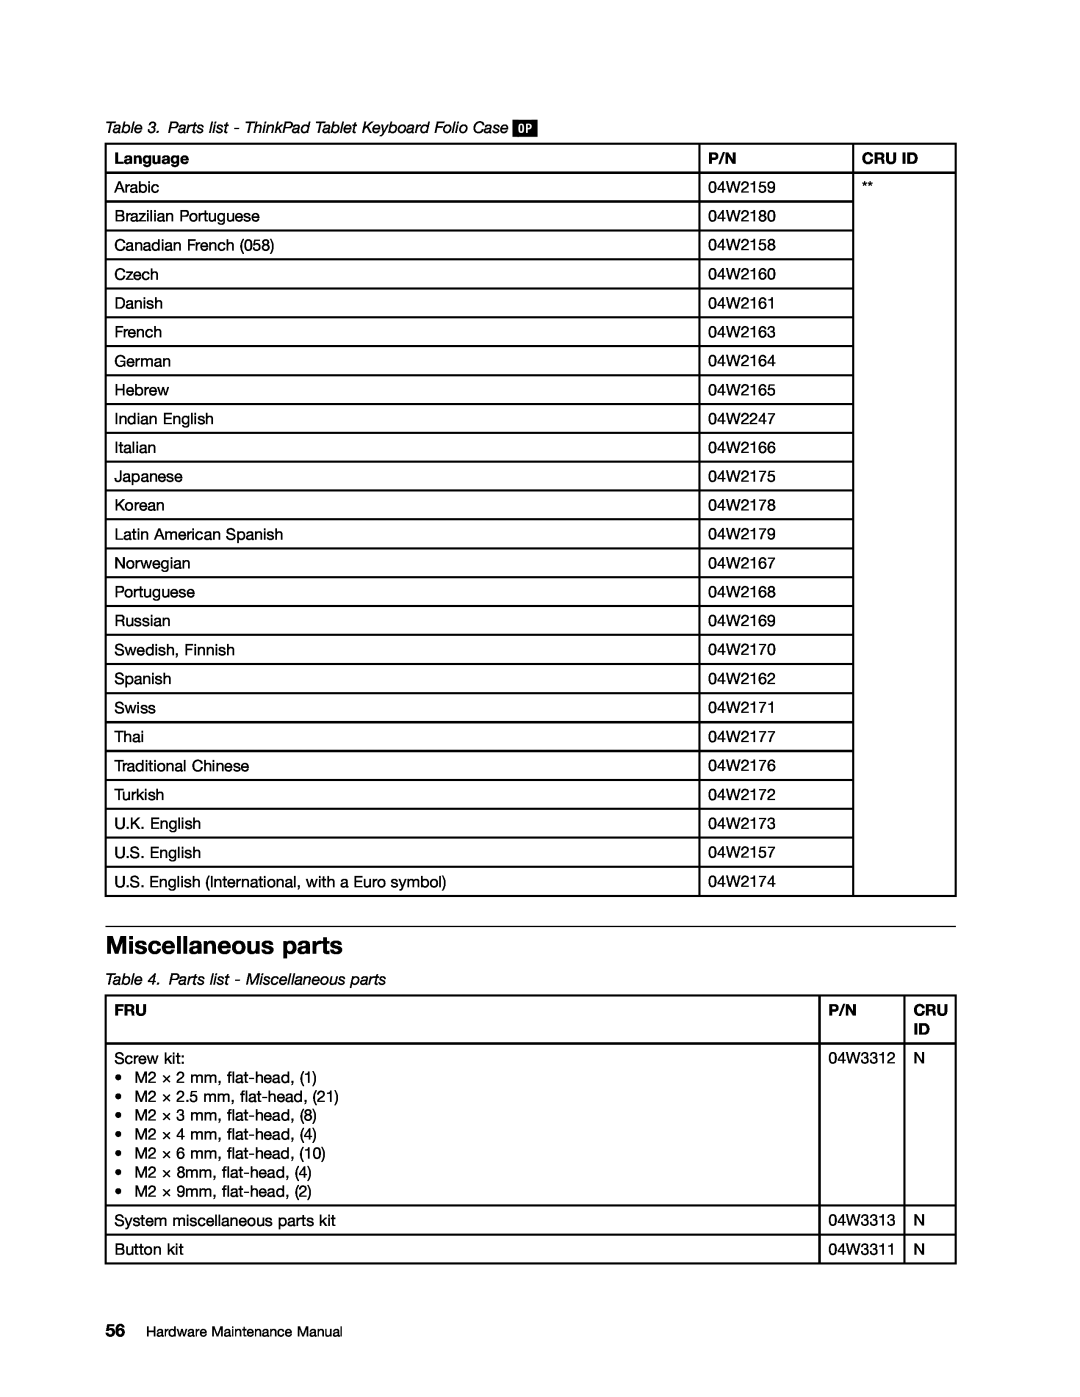 Lenovo 183825U, 183822U manual Parts list - Miscellaneous parts 